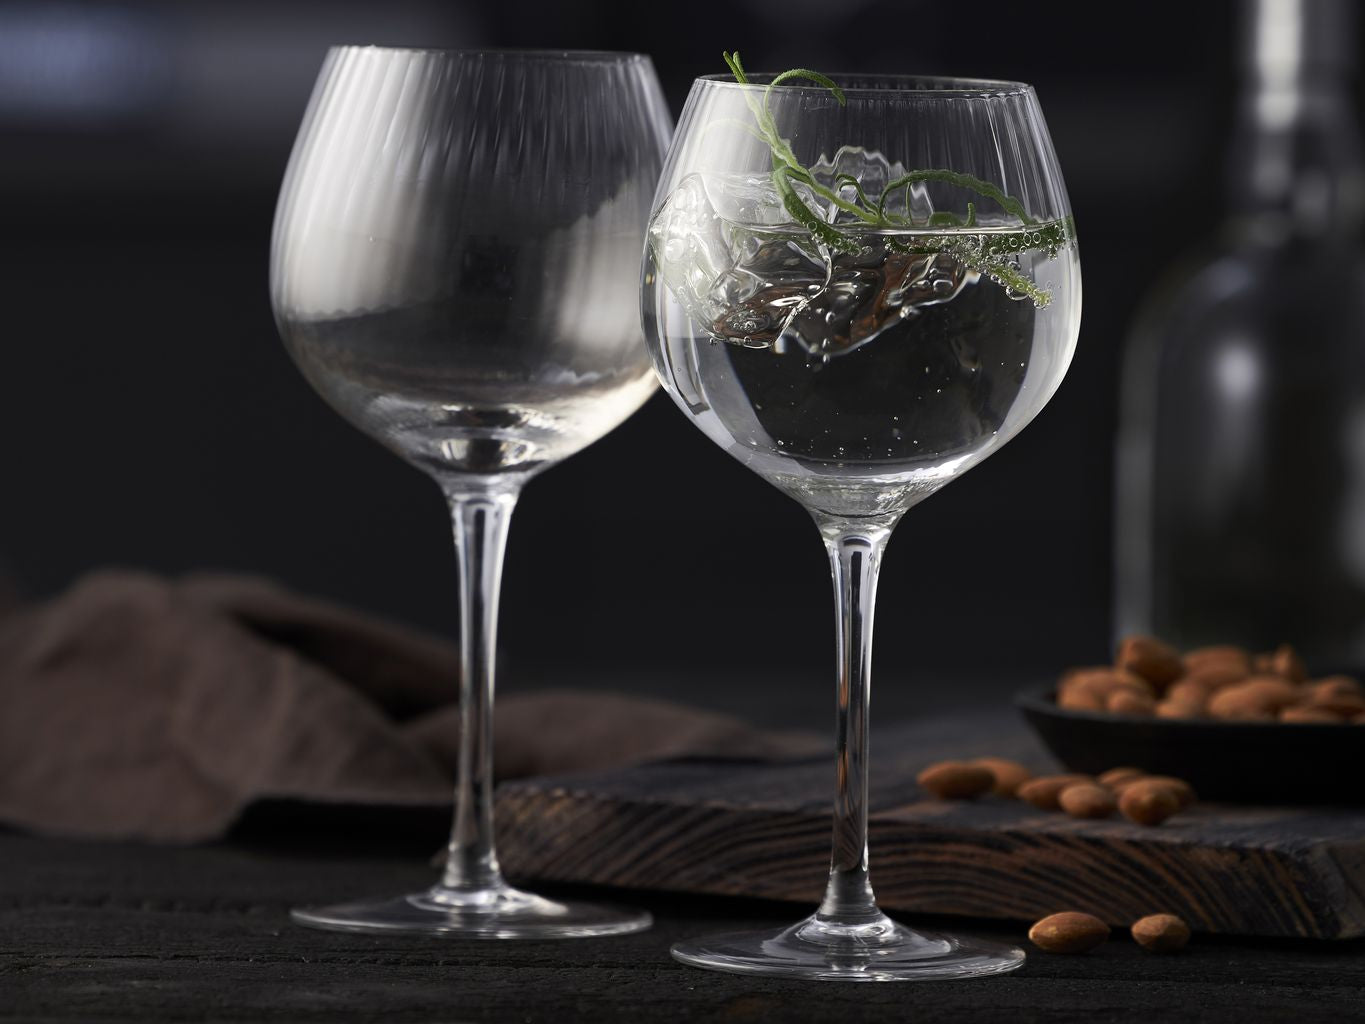 Lyngby Glas Palermo Gin & Tonic Glass 65 Cl, 4 ks.